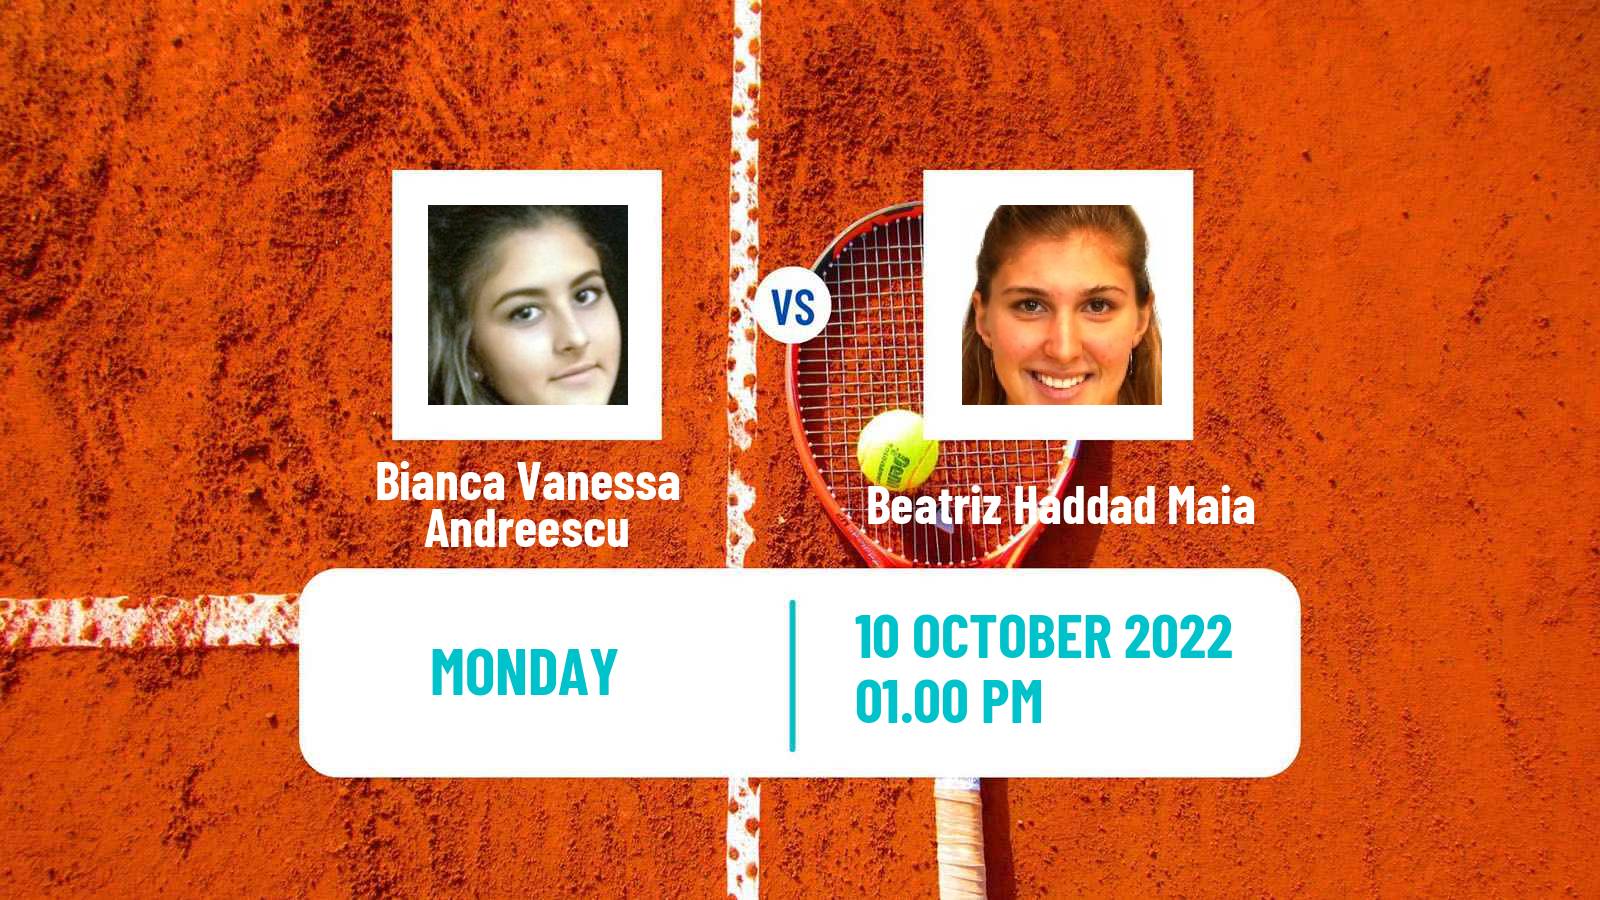 Tennis WTA San Diego Bianca Vanessa Andreescu - Beatriz Haddad Maia